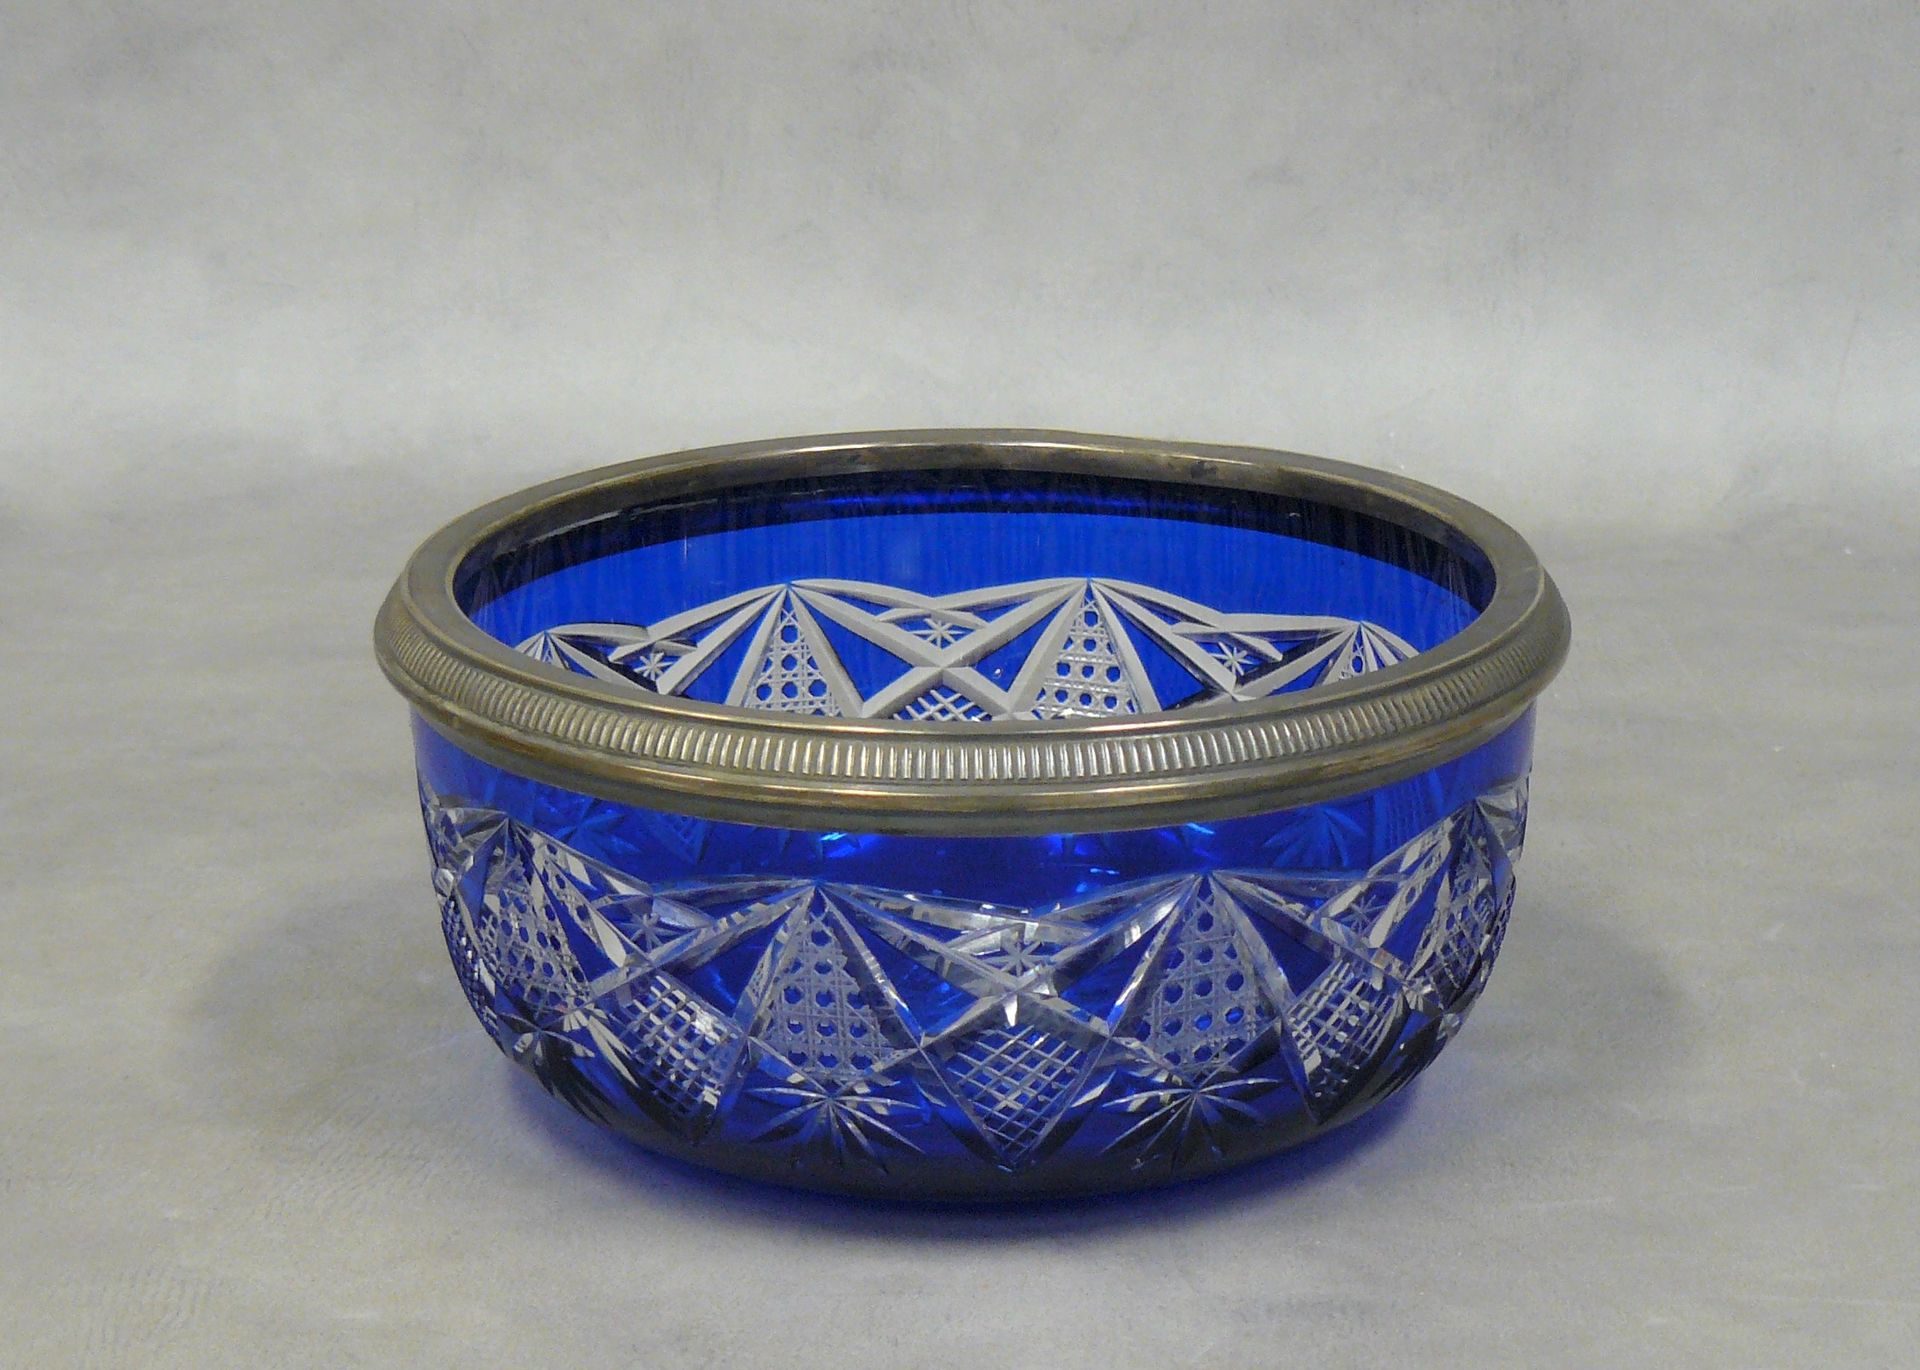 Null blue glass bowl, silver mounting (minerva) - H 9,5 cm Ø 21,5 cm